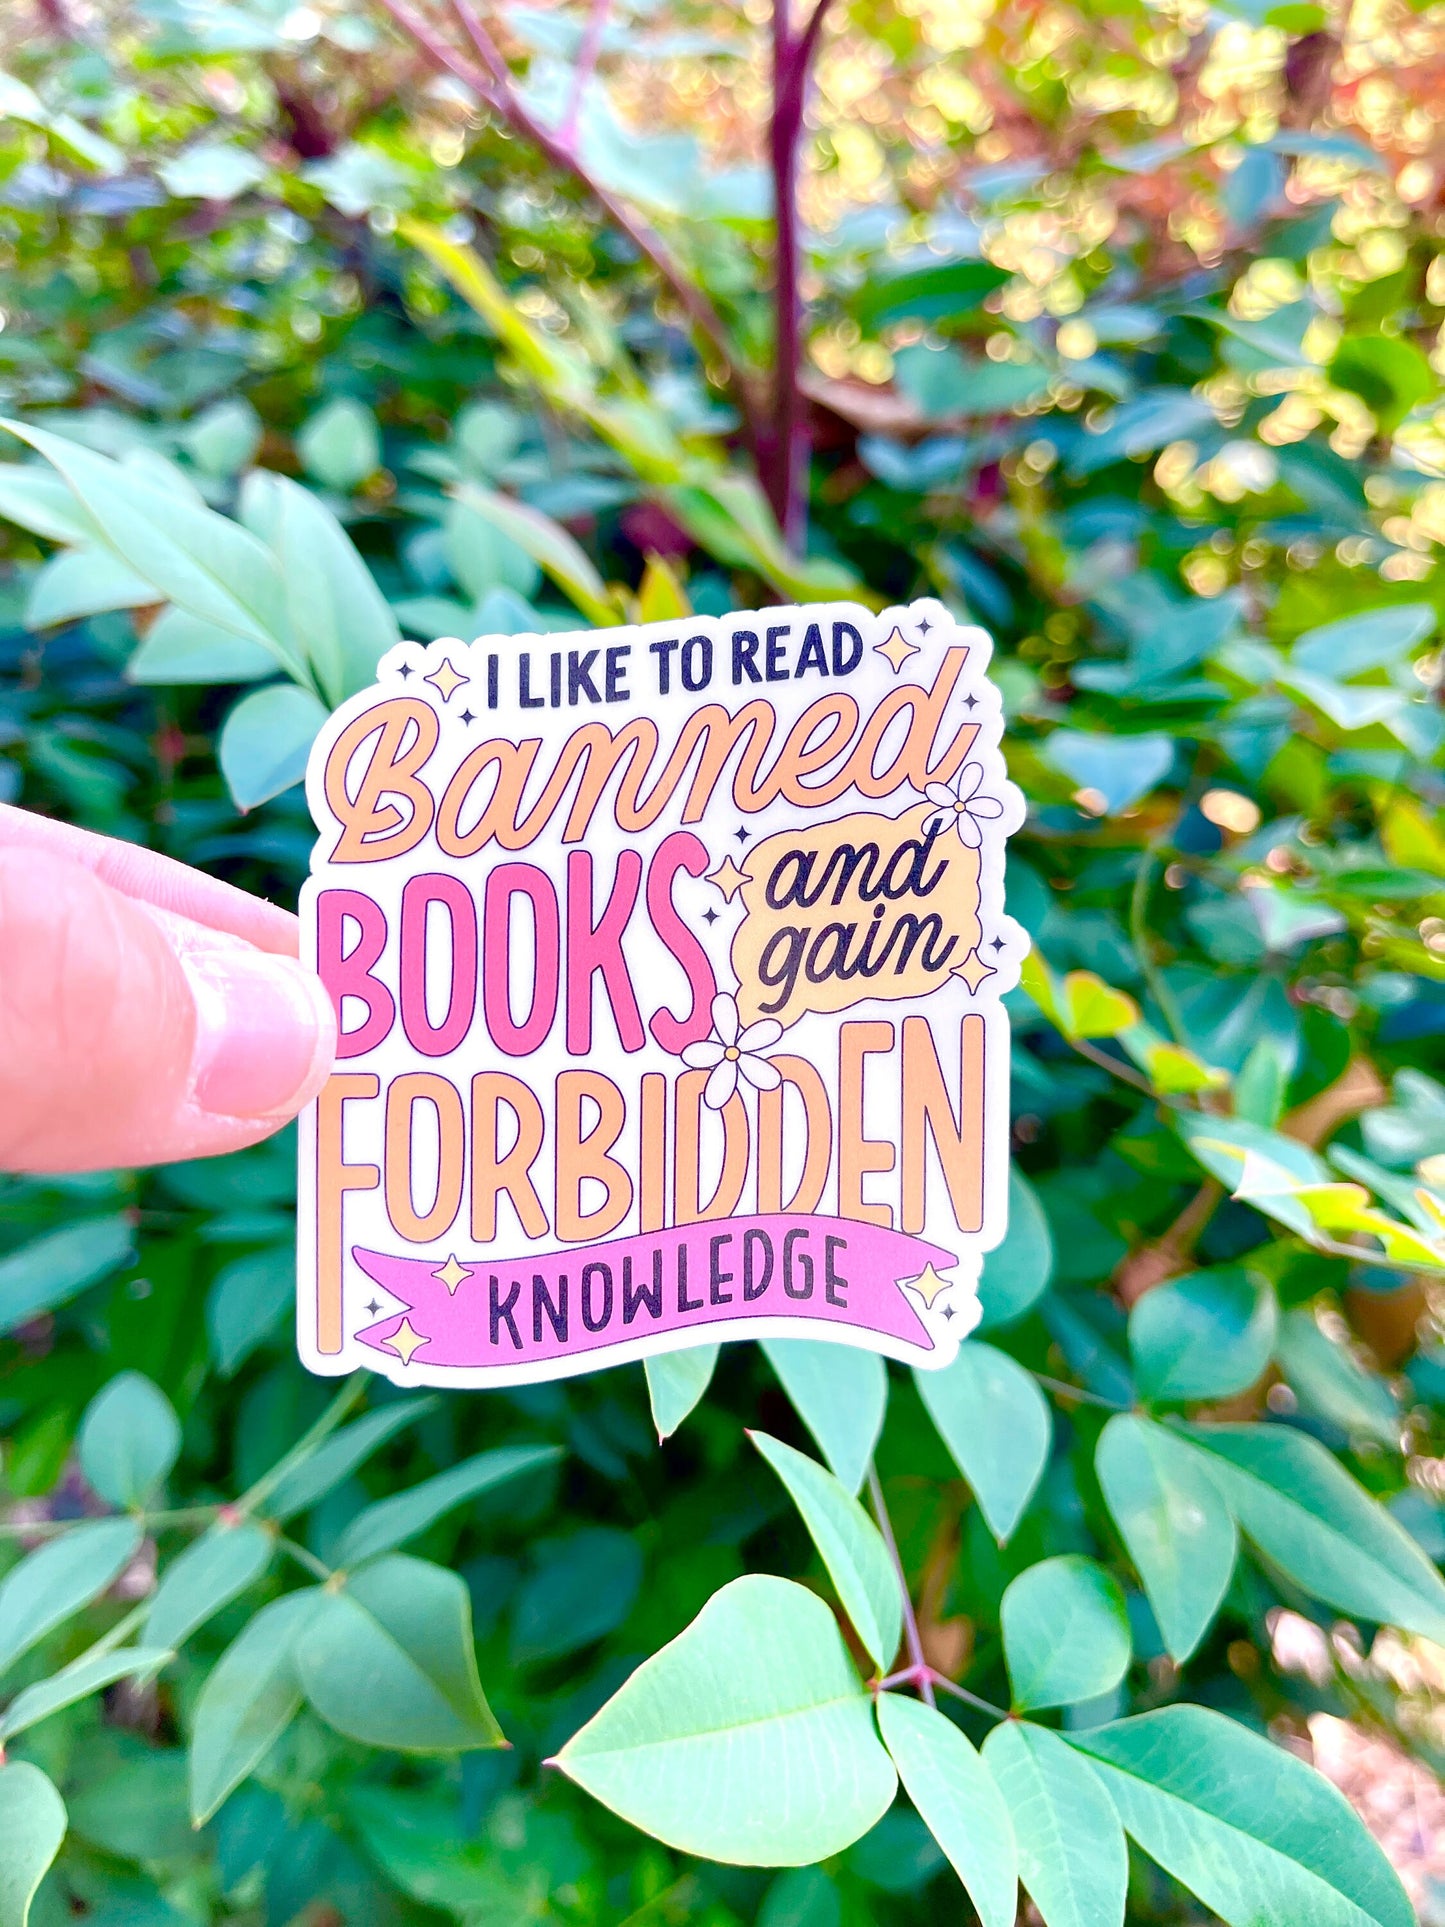 I Like to Read Banned Books Sticker - Forbidden Books - Booktok - Book Club - Bookish Sticker - Kindle Sticker